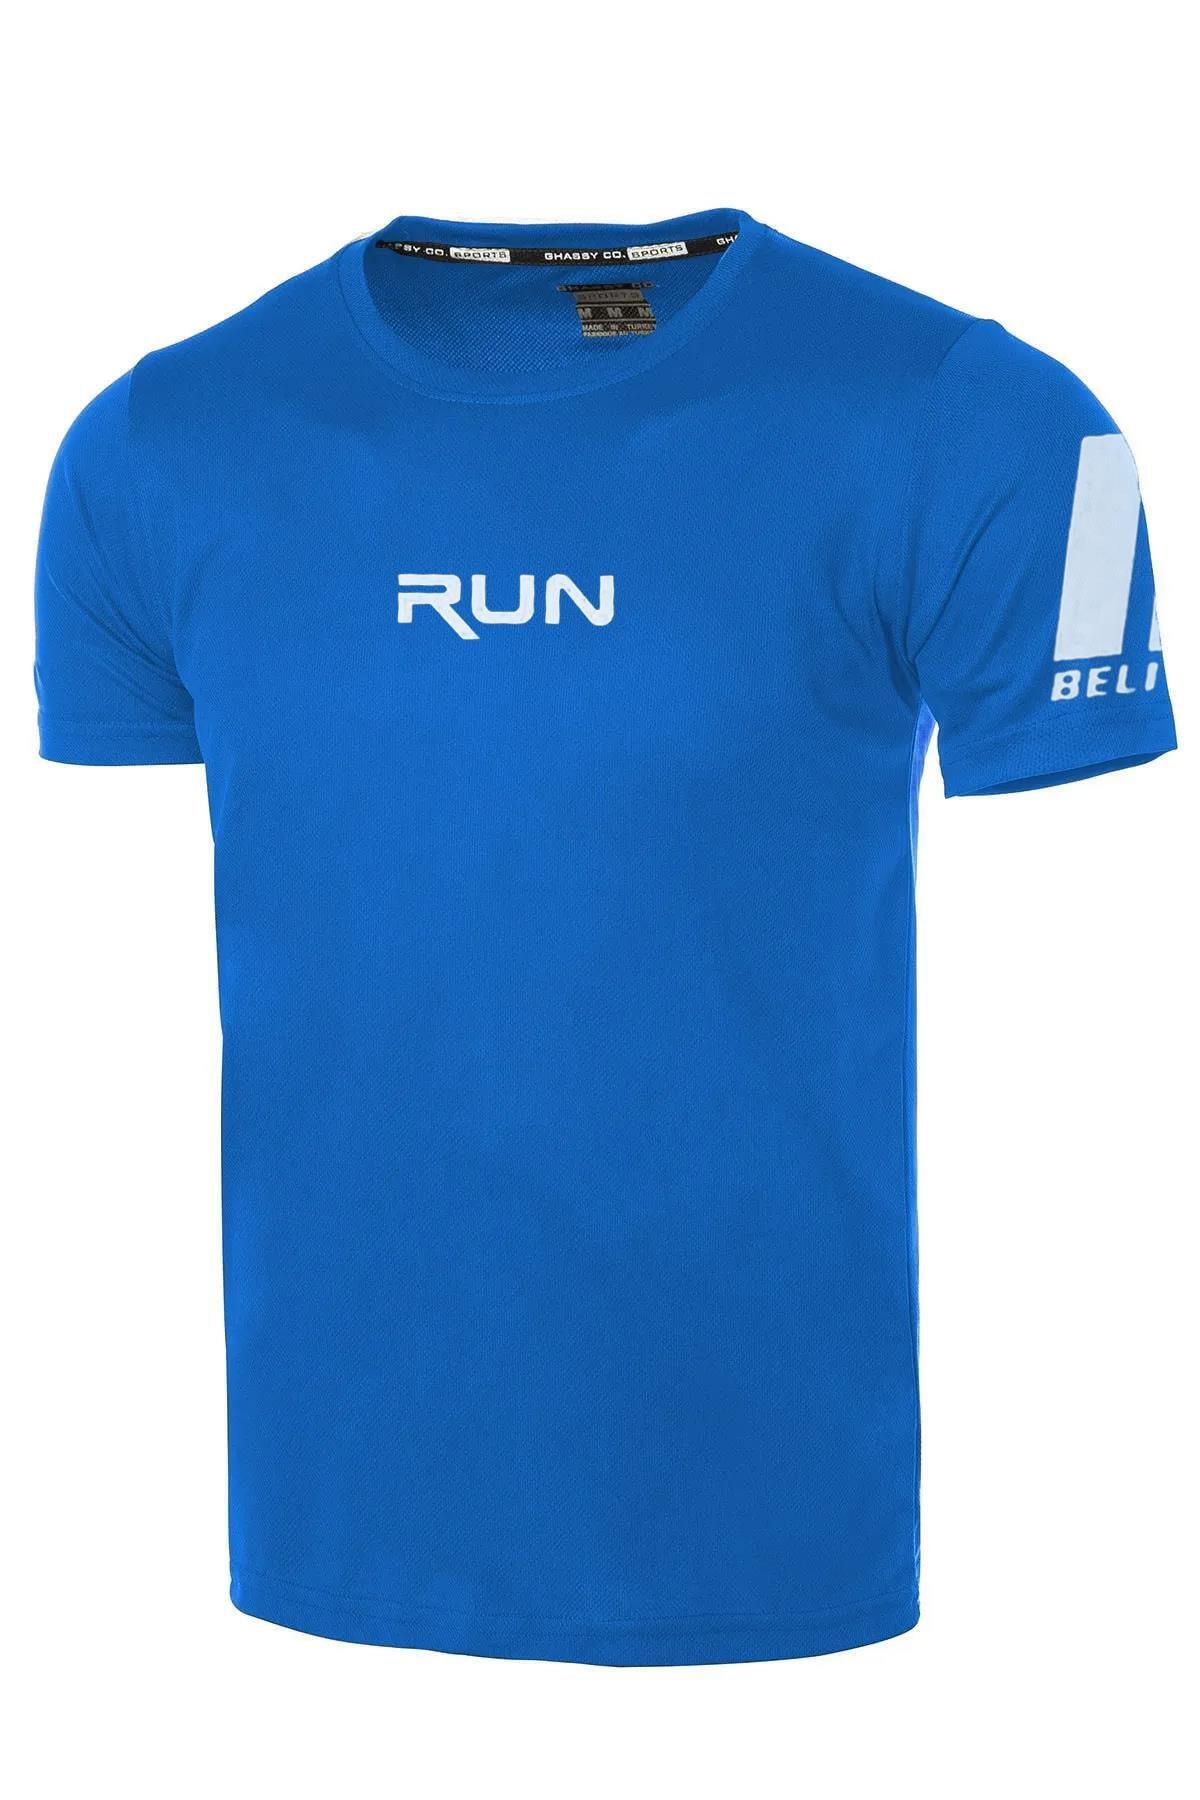 Ghassy Co Ghassy Co. Erkek Nem Emici Hızlı Kuruma Performans Running Spor T-shirt